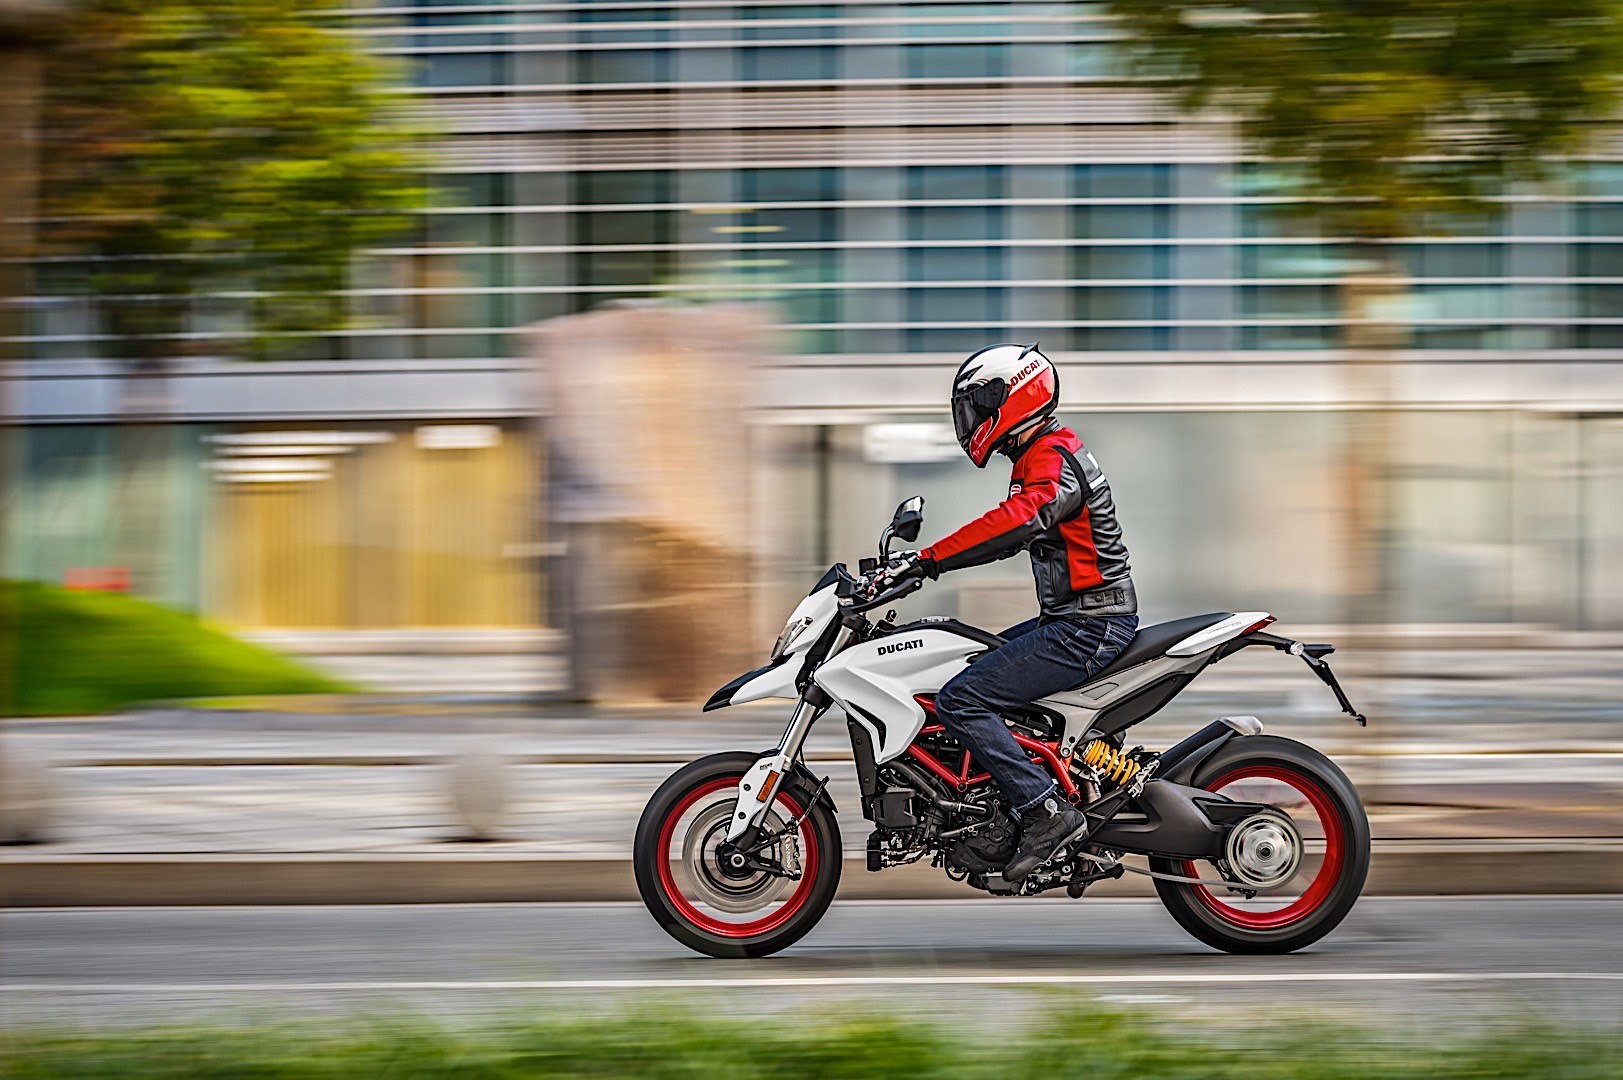 2018 Ducati Hypermotard 939 Gets a Fresh Look - autoevolution